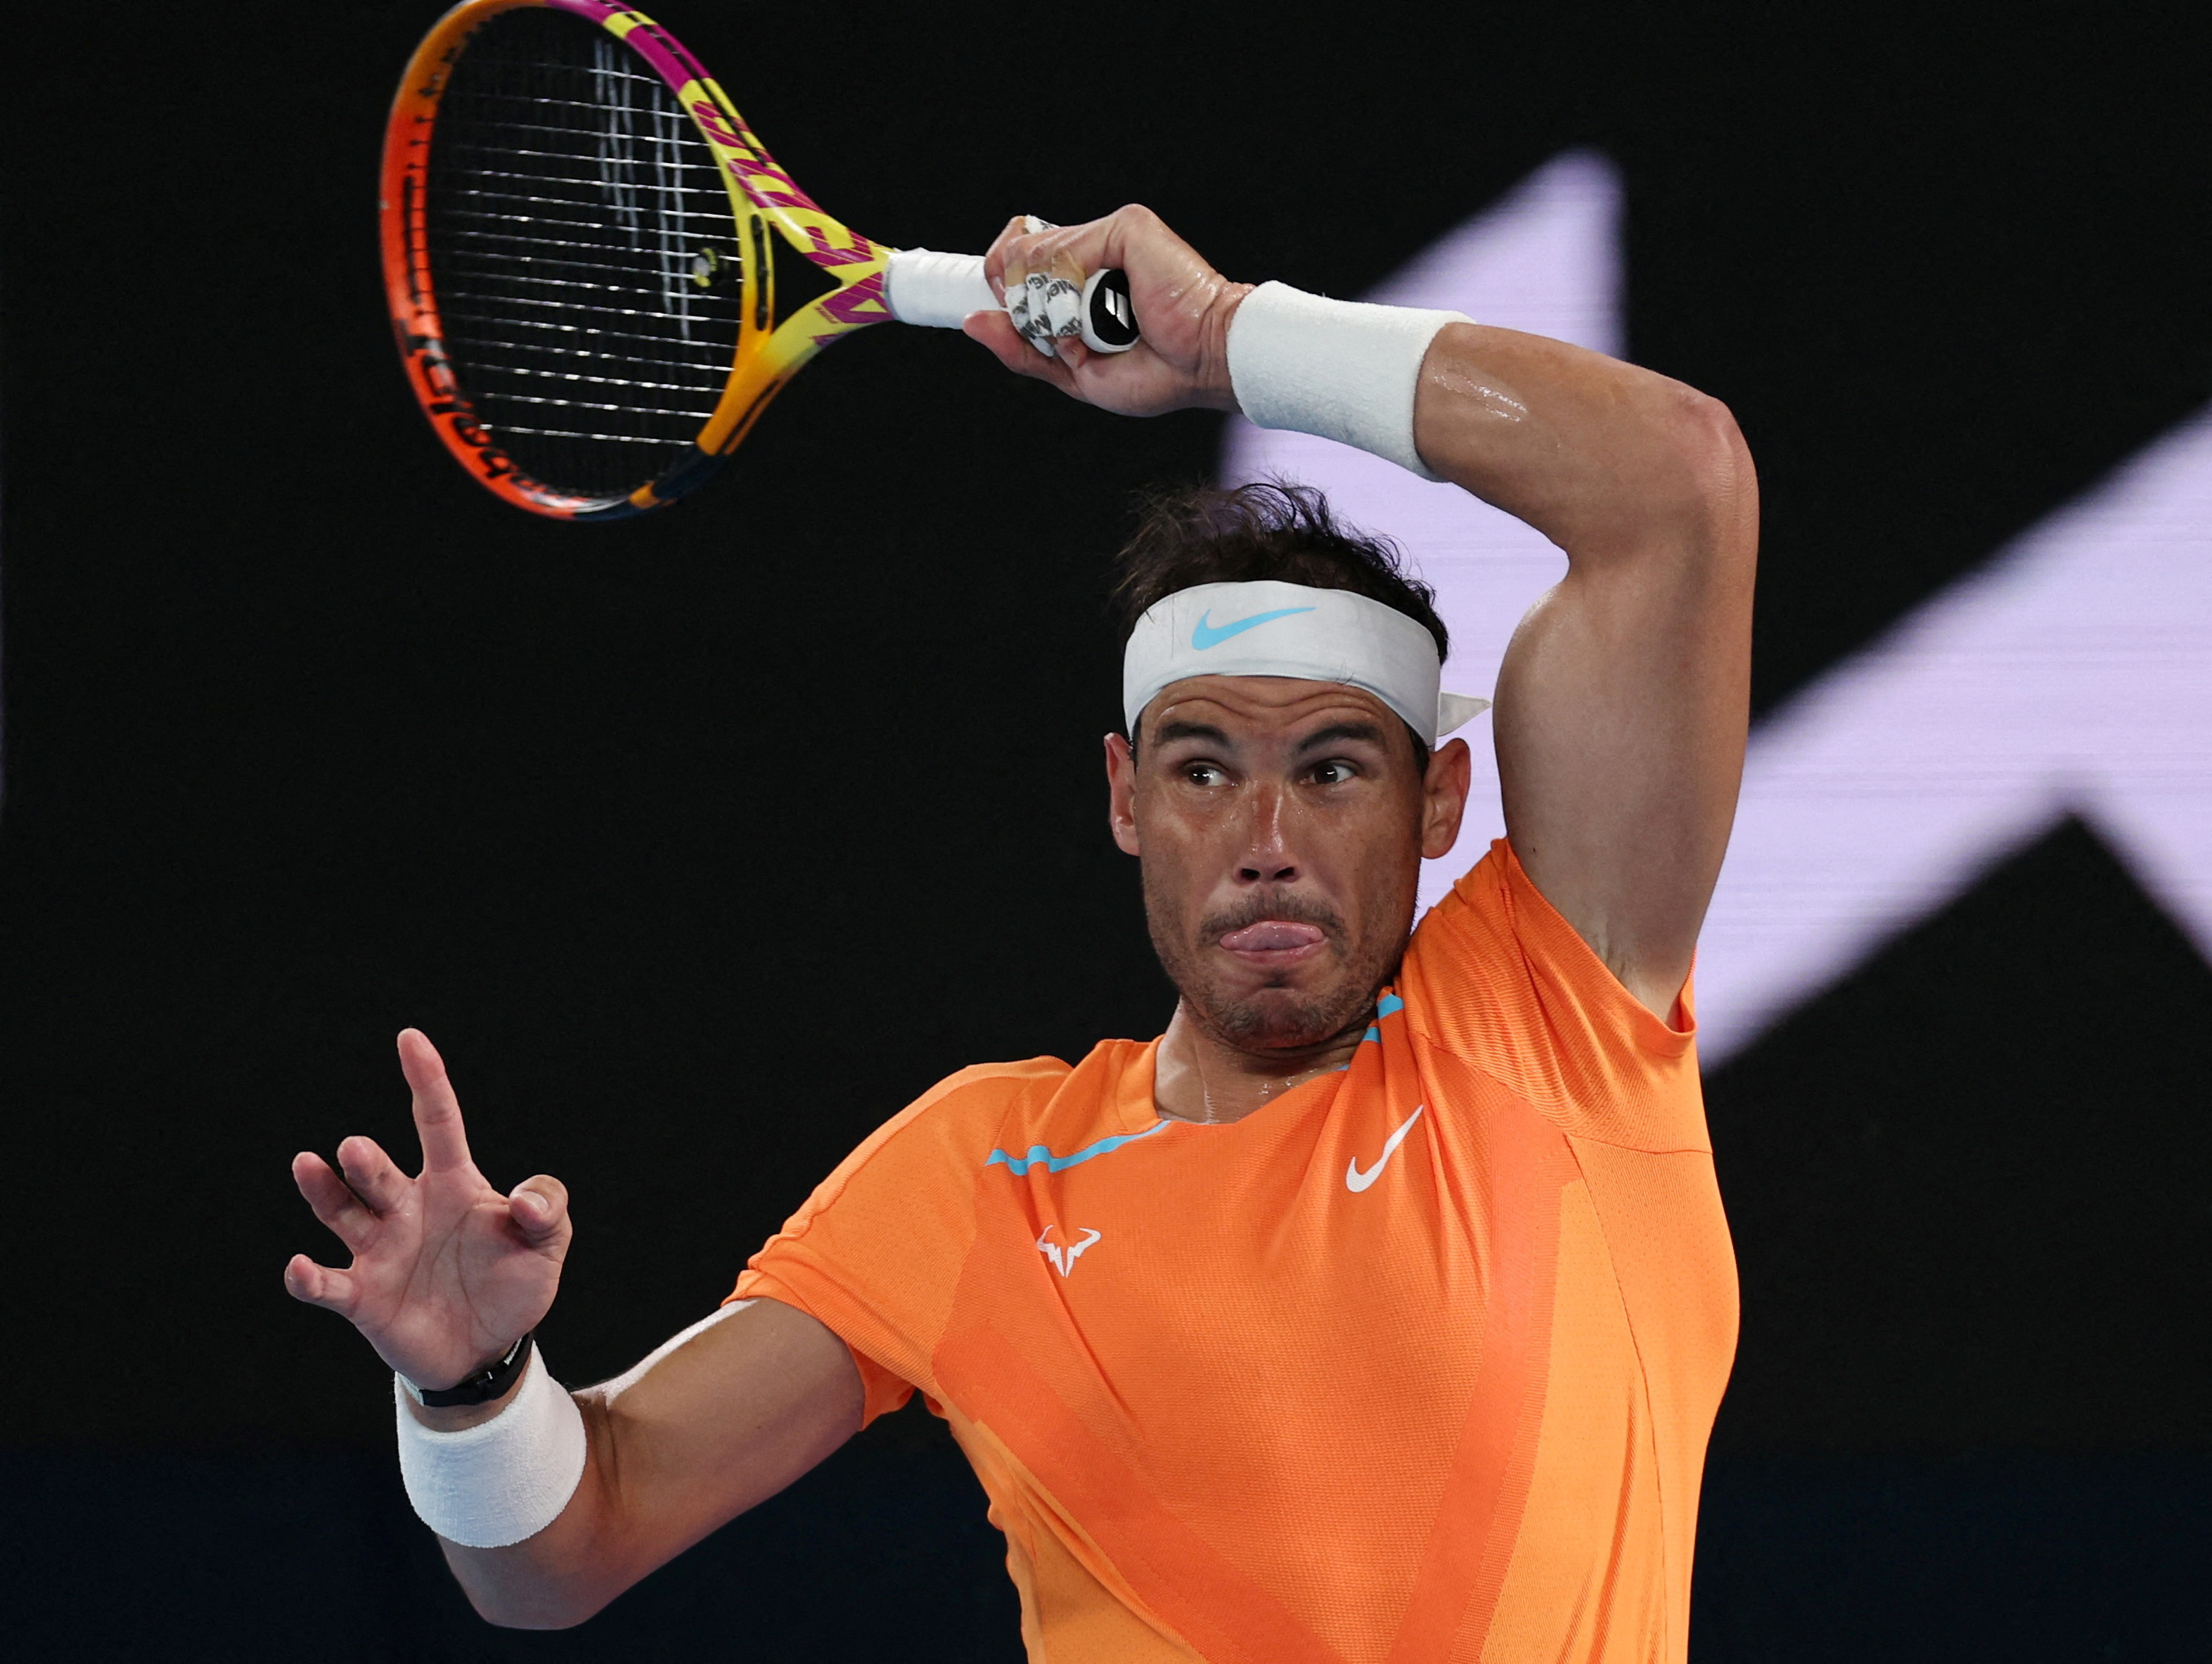 ATP, WTA and Grand Slams align on Netflix tennis docuseries - SportsPro